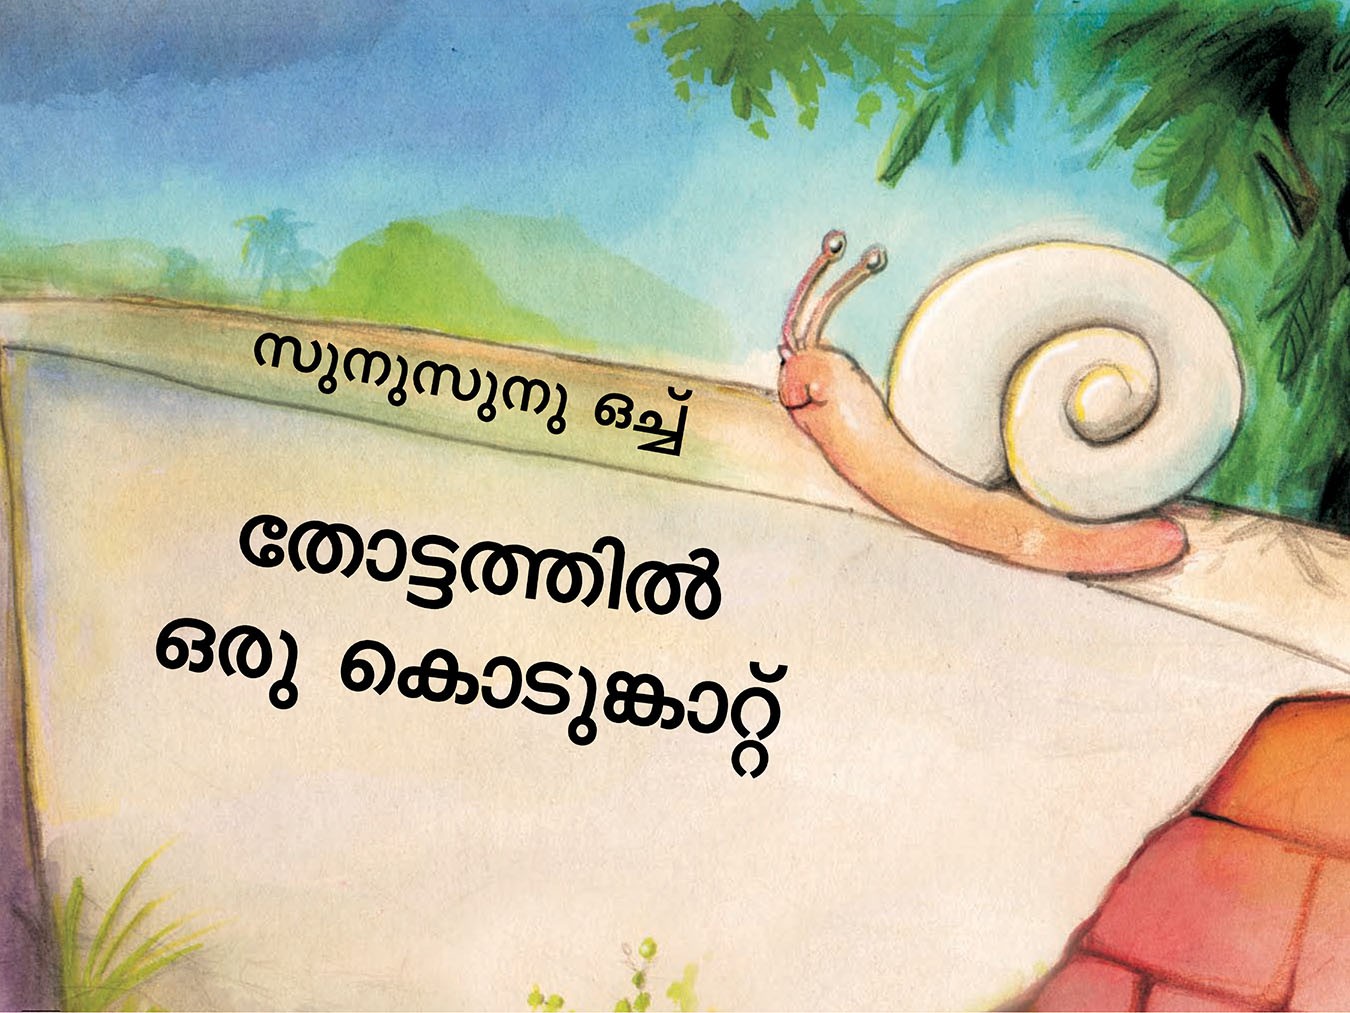 Sunu-sunu Snail: Storm in the Garden/Sunusunu Ochu: Thottathil Oru Kodunkattu (Malayalam)